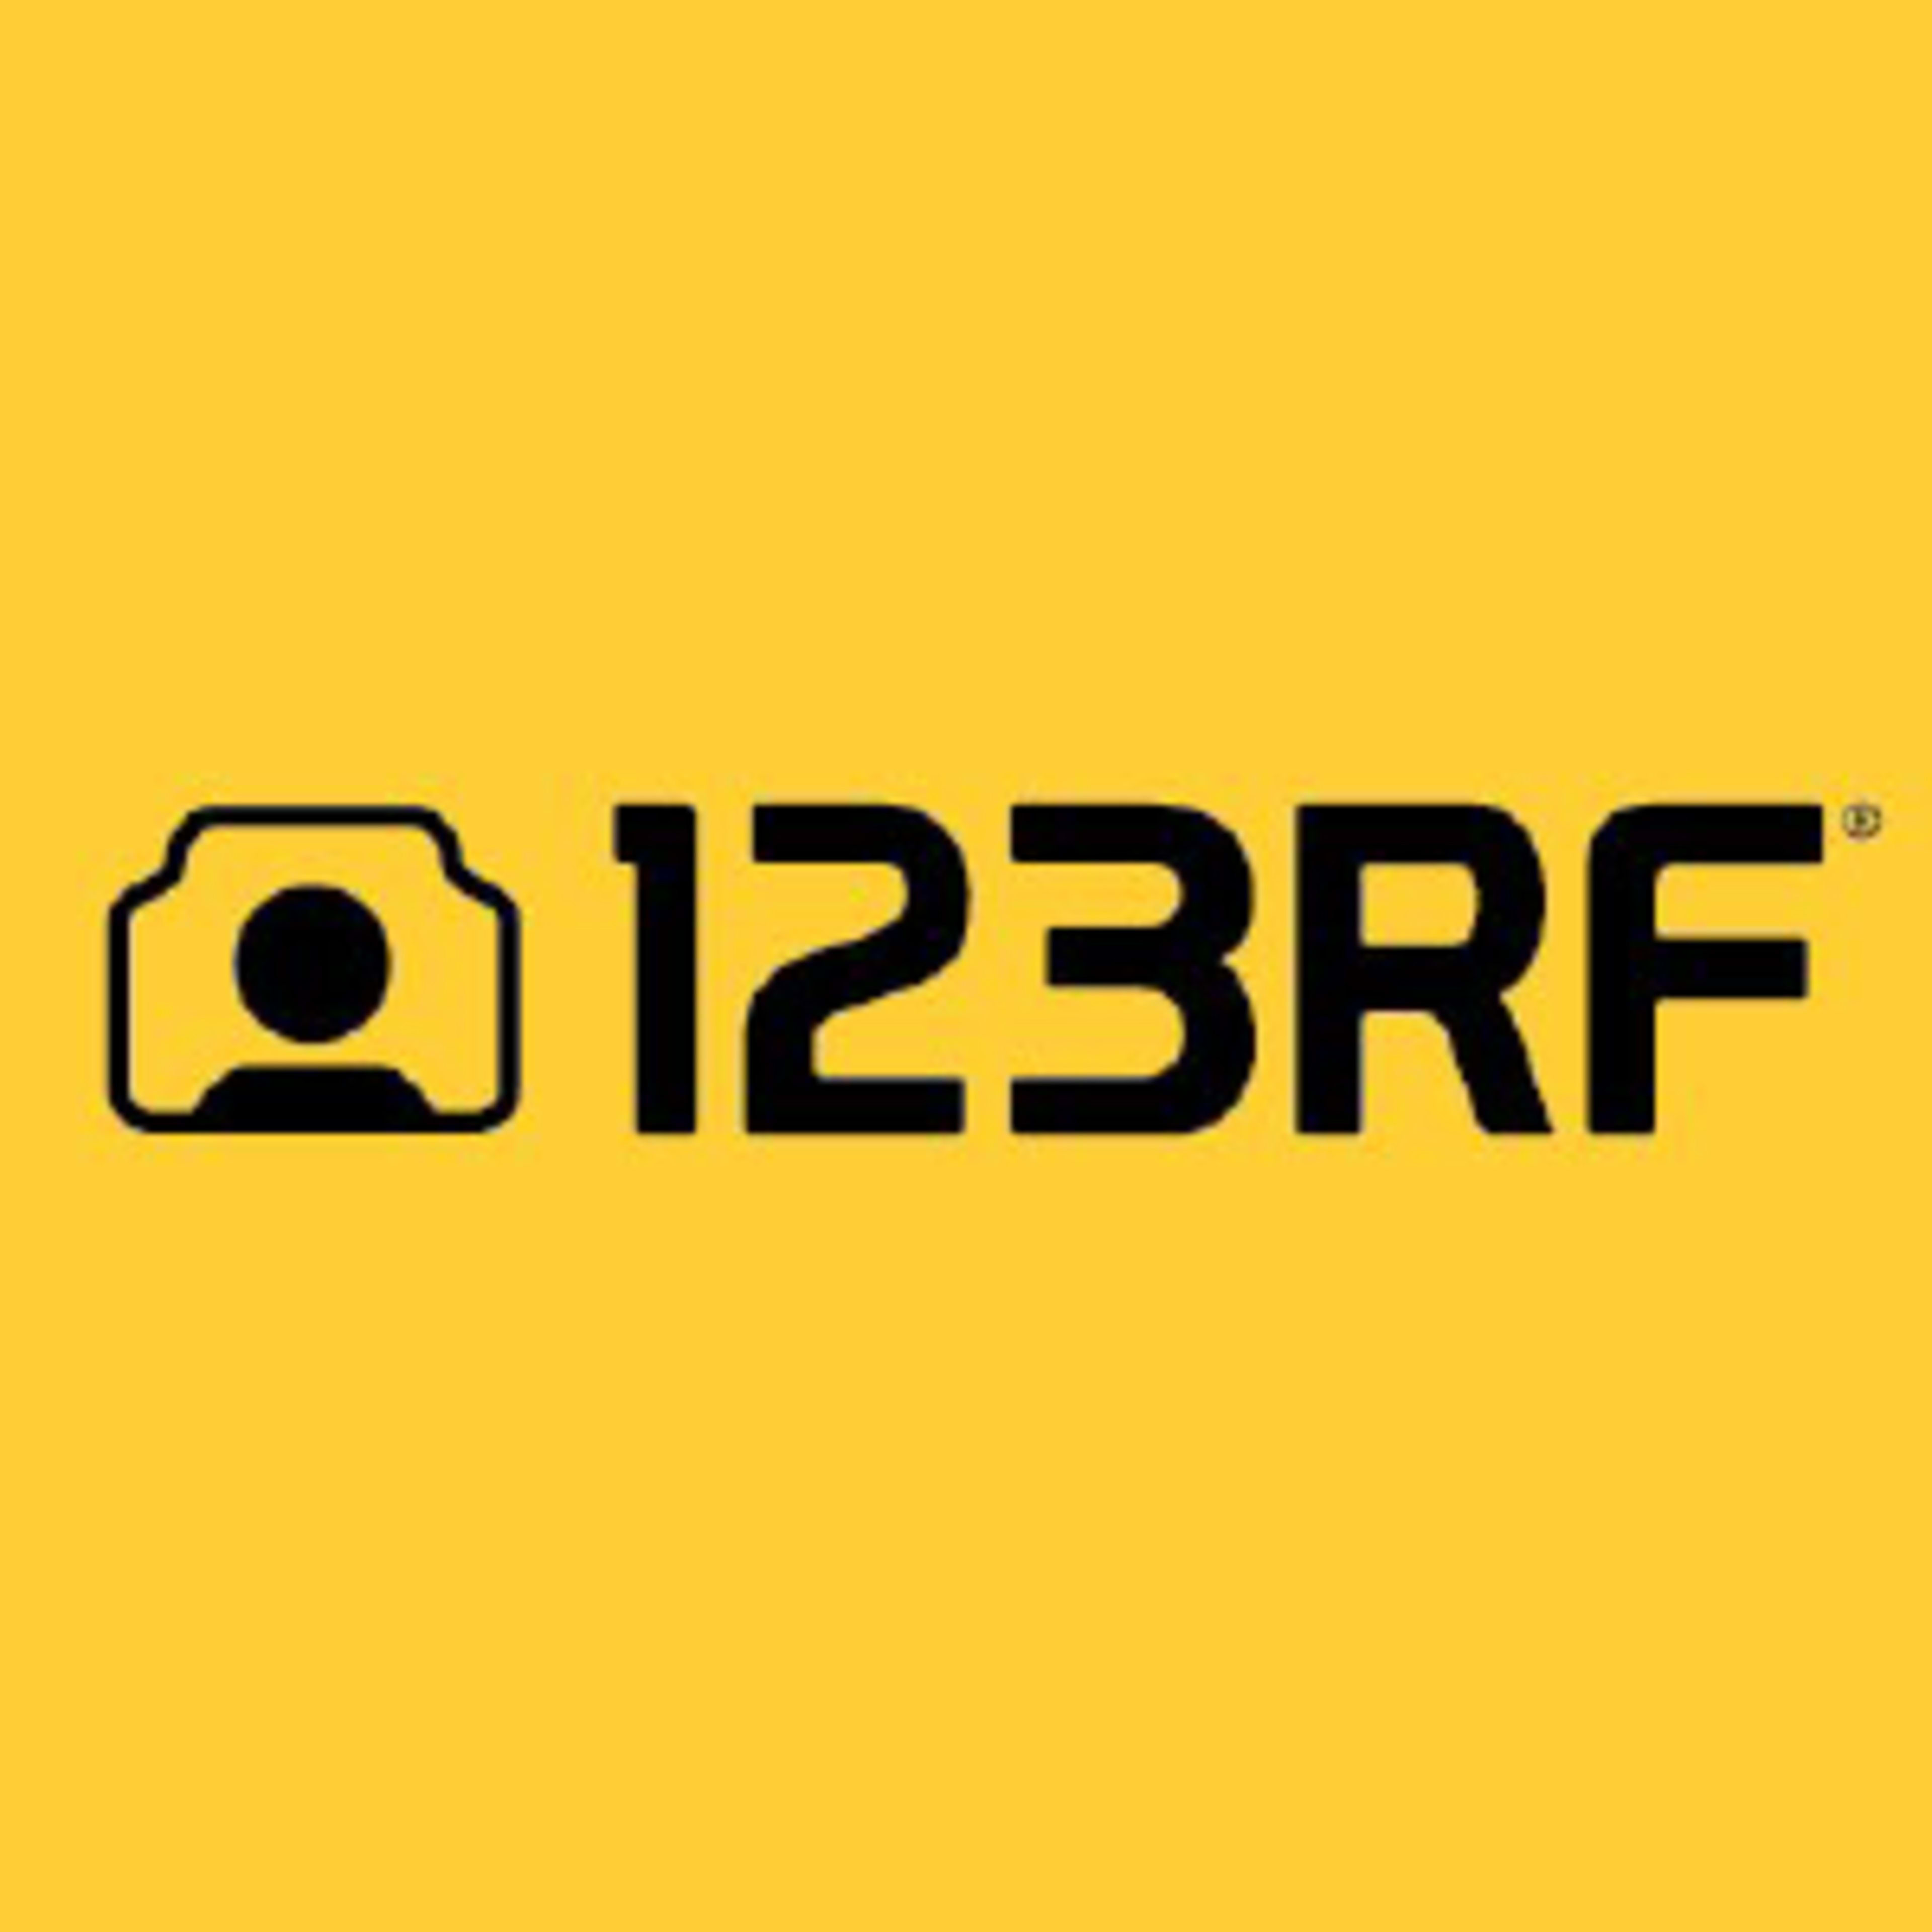 123RF Stock Photo SubscriptionCode